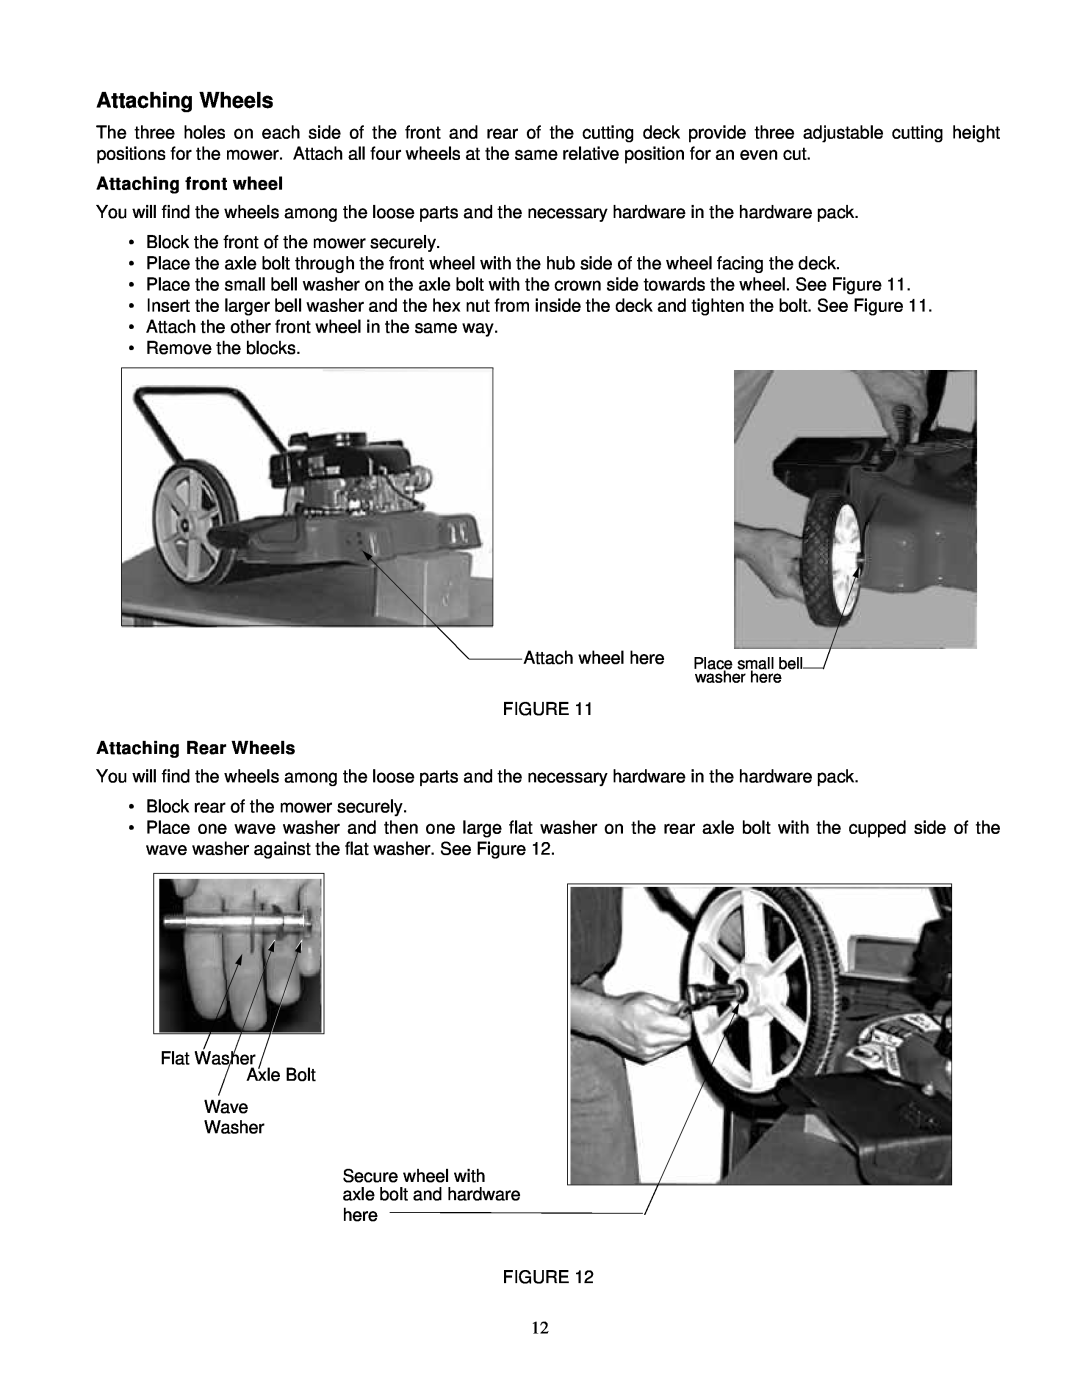 Yard Machines 570 manual Attaching Wheels, Attaching front wheel, Attaching Rear Wheels 